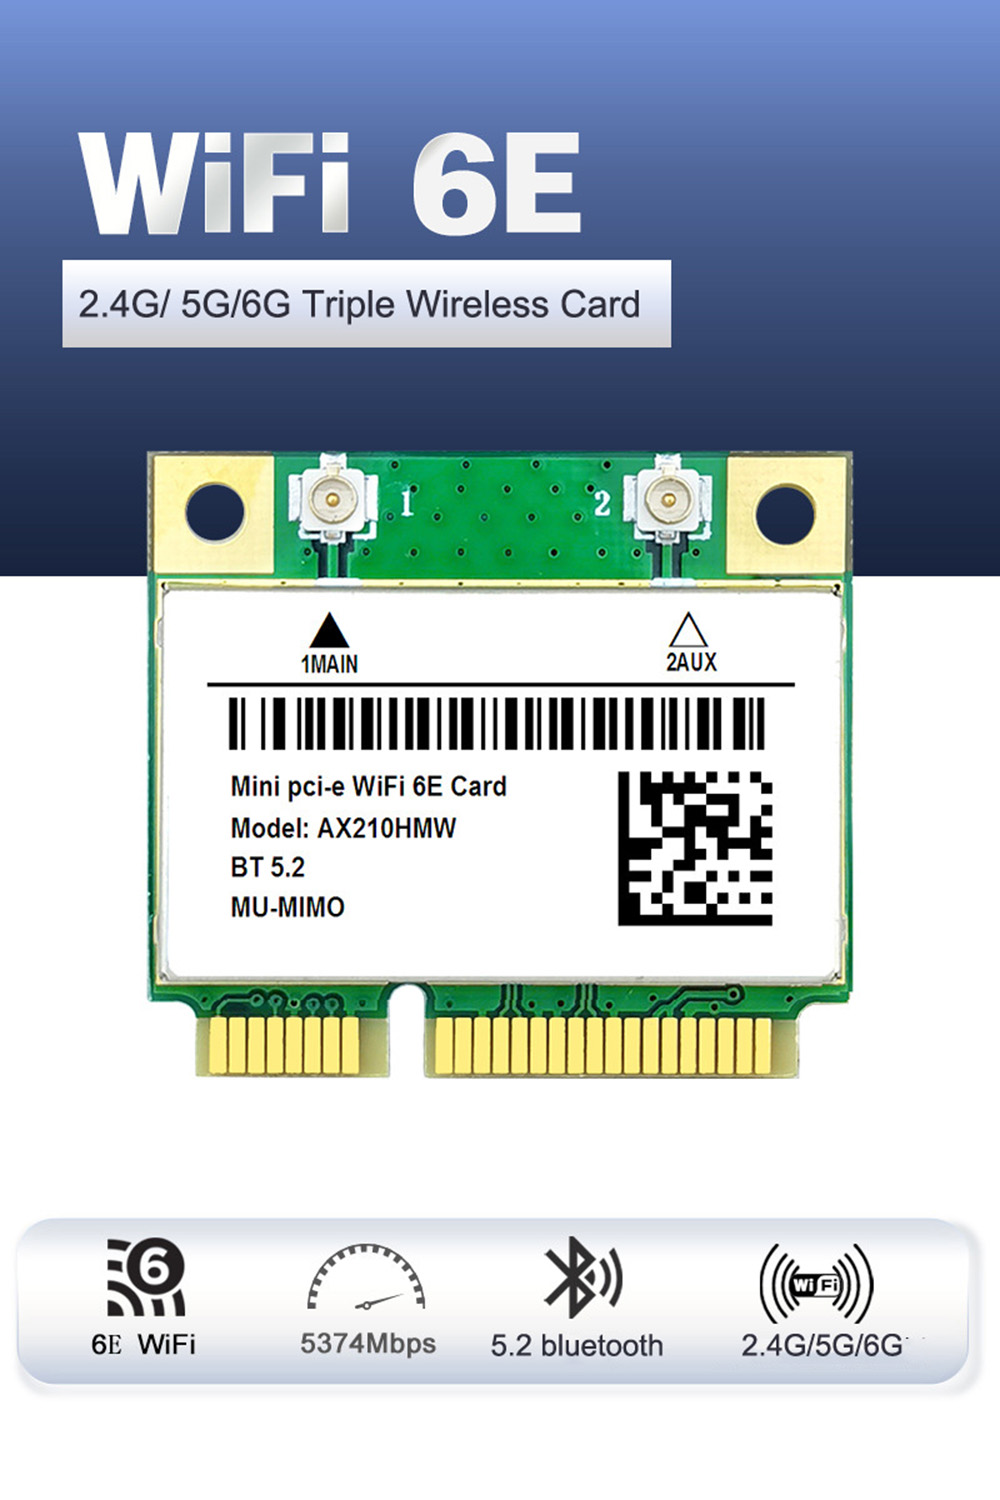 WTXUP-AX210HMW-WiFi-6E-Wireless-Network-Card-5G-Dual-Band-2400Mbps-WiFi-Card-Mini-pcie-52-bluetooth-1900067-1